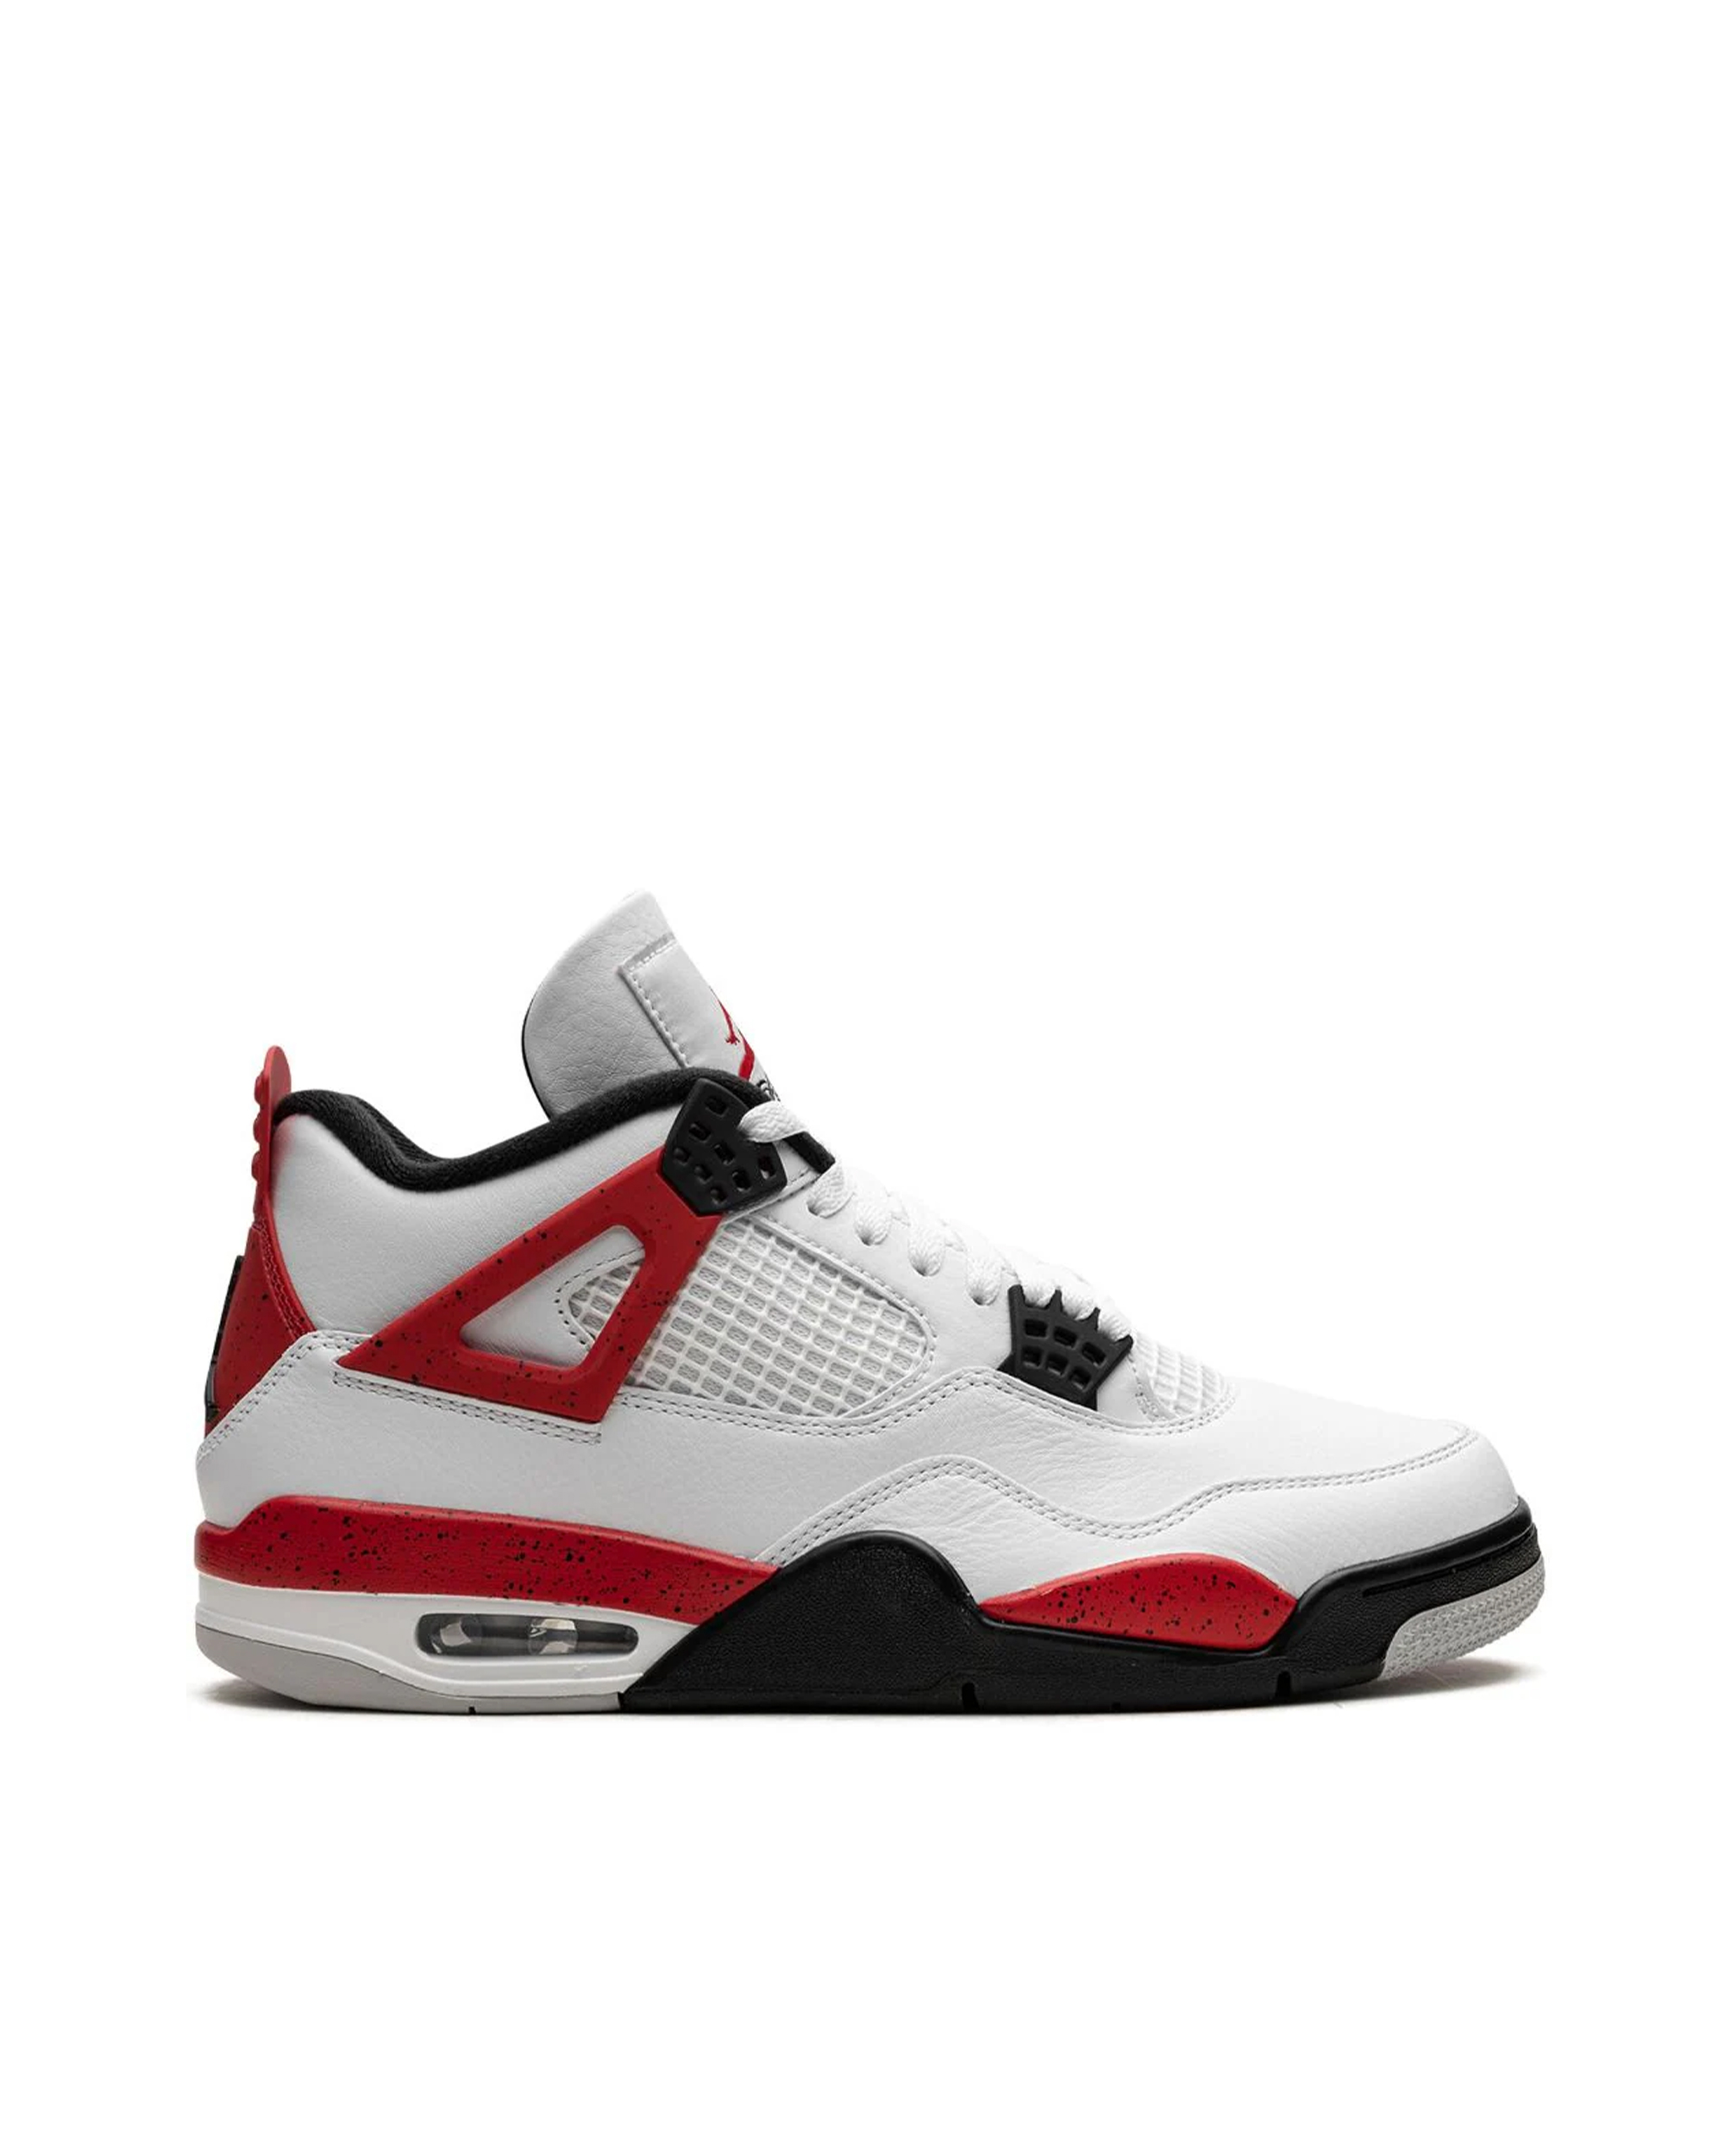 Shop Nike Jordan 4 Retro Red Cement